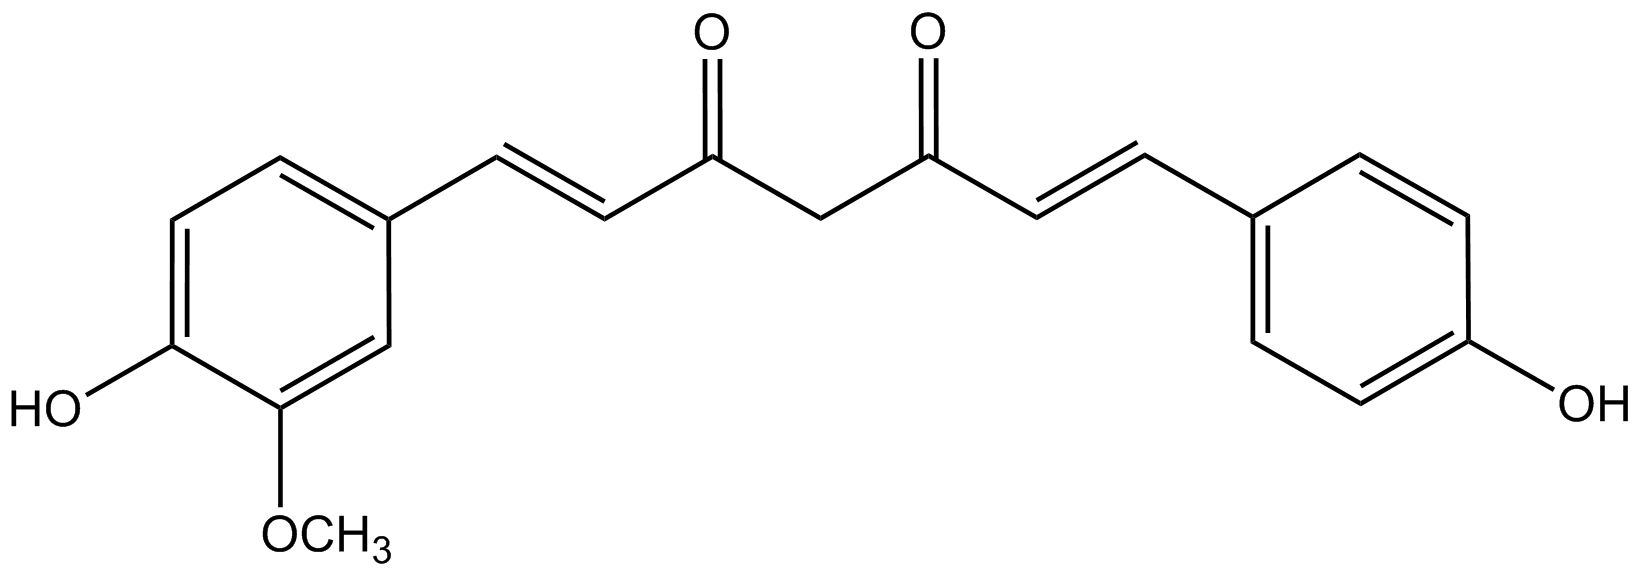 Demethoxycurcumin phyproof® Referenzsubstanz | PhytoLab